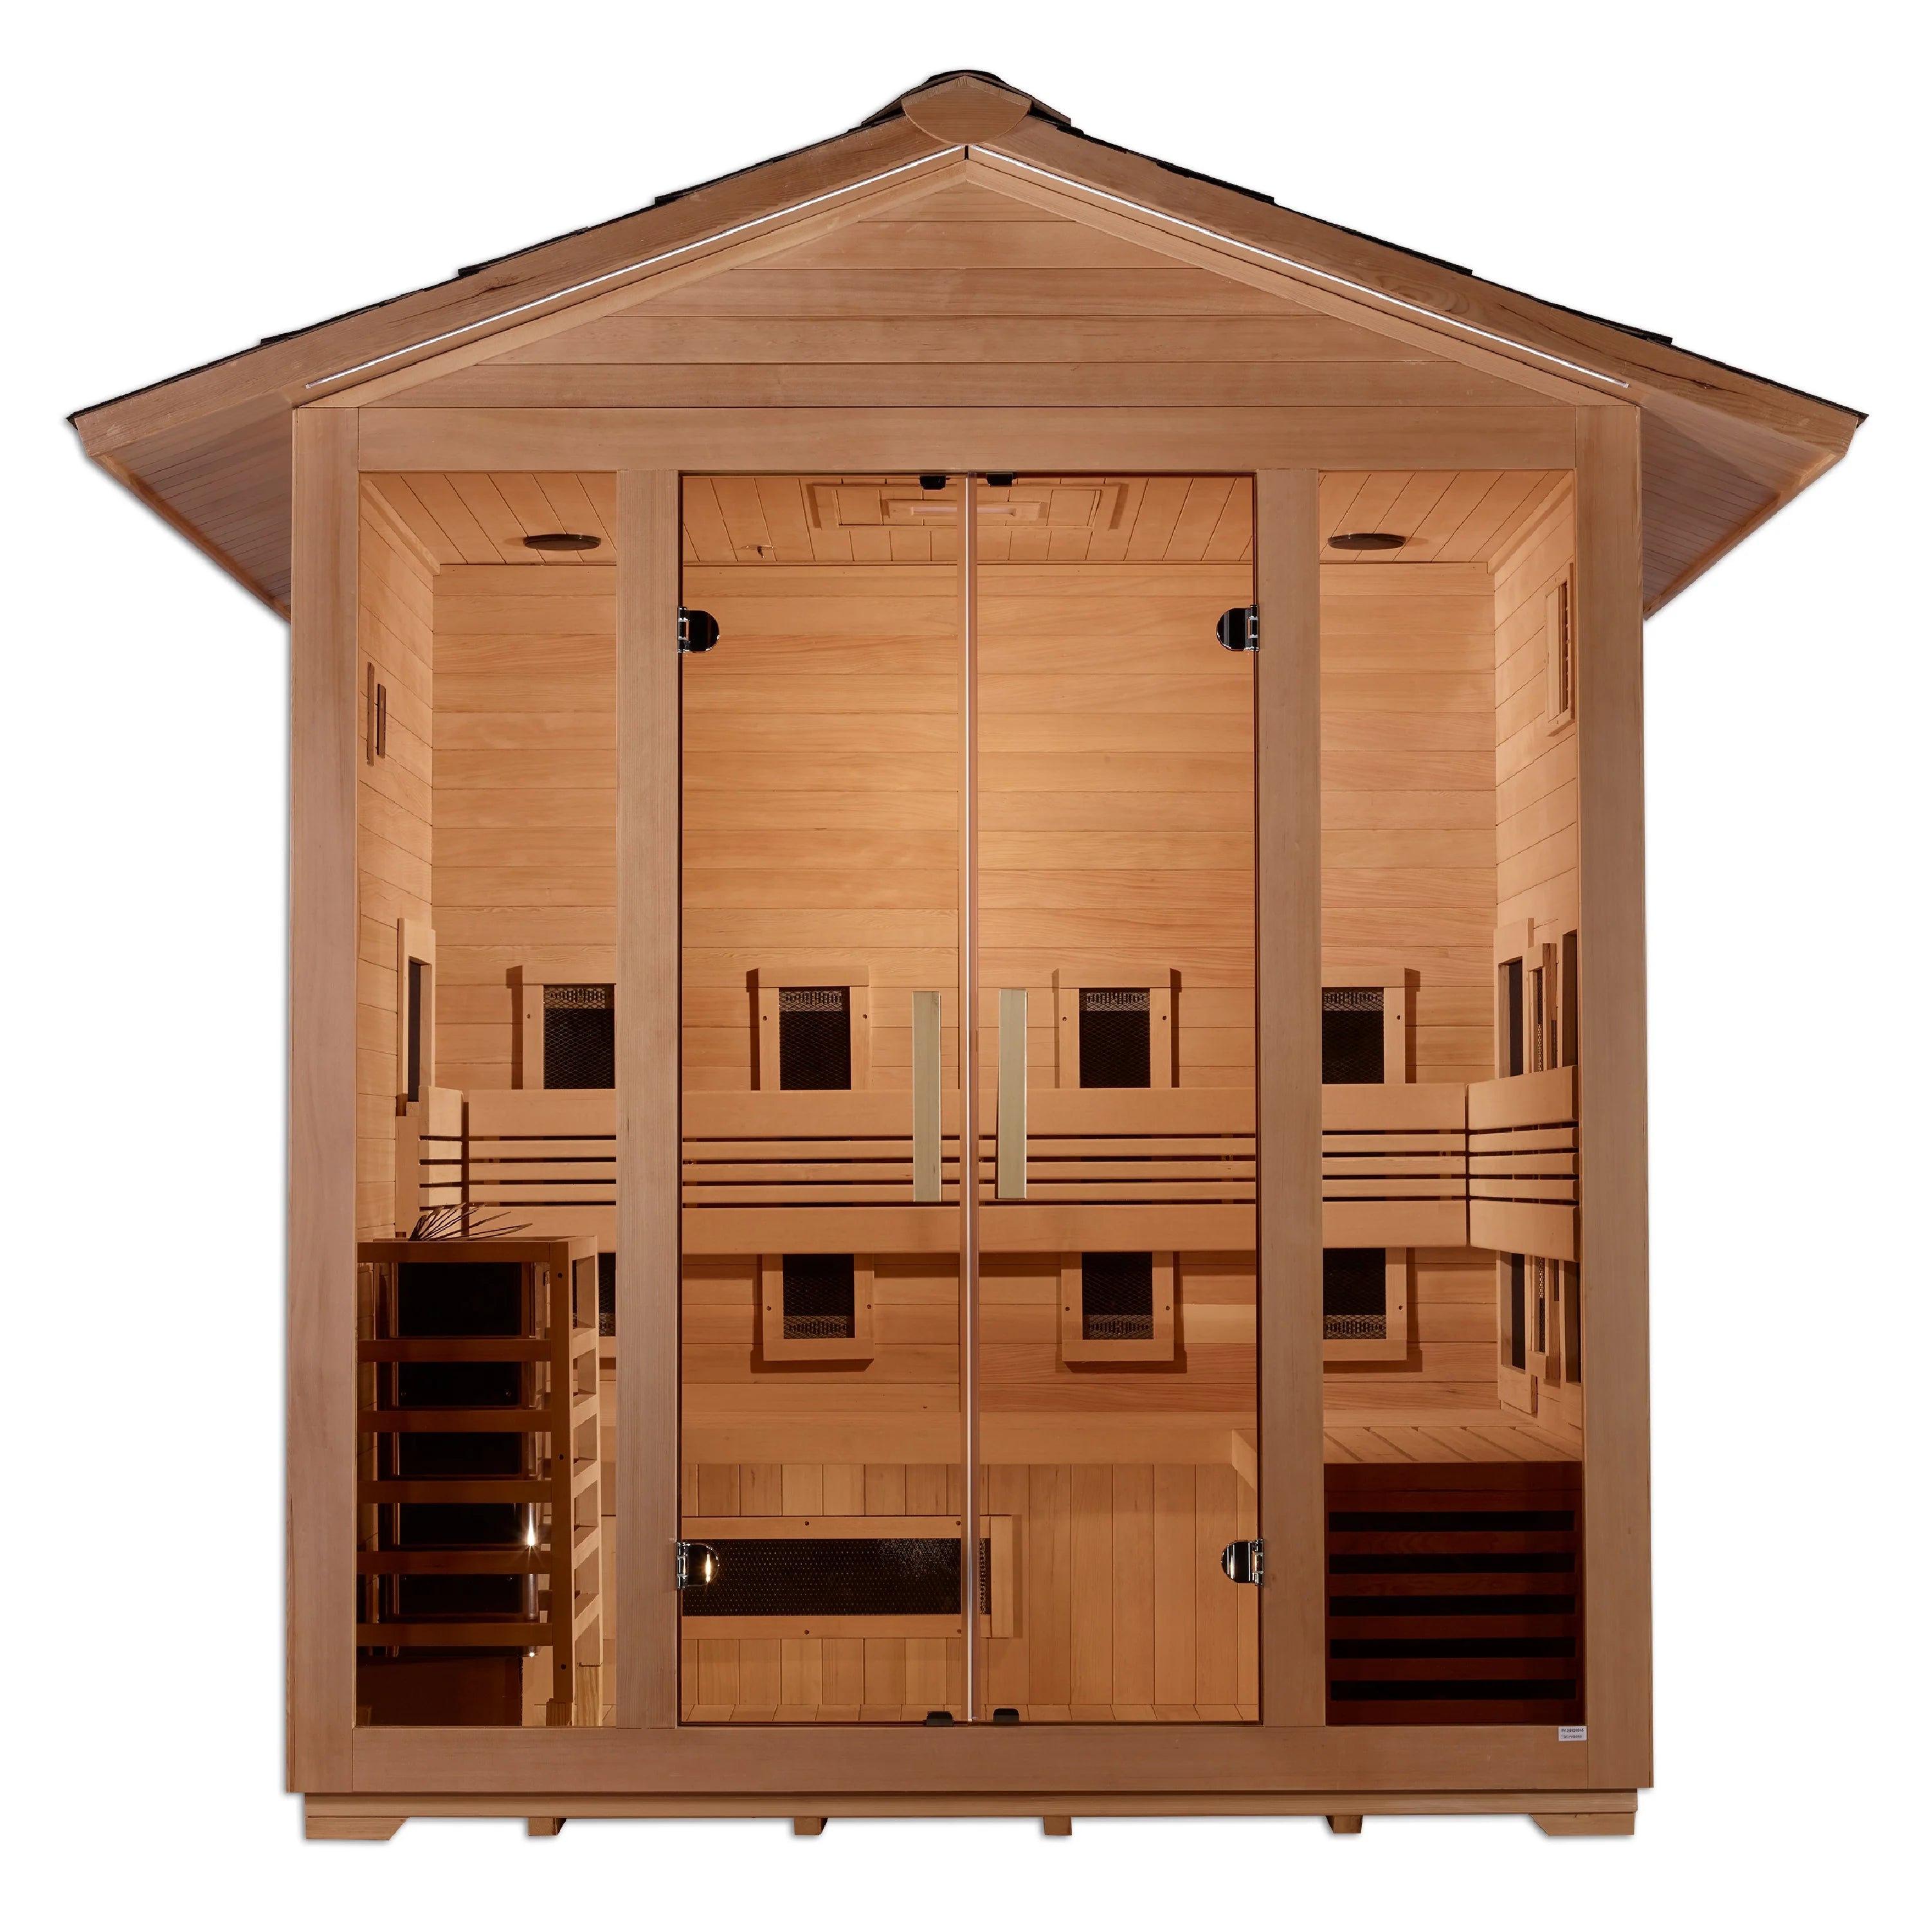 Golden Designs | Gargellen 5 Person Hybrid Outdoor Steam Sauna - Canadian Hemlock